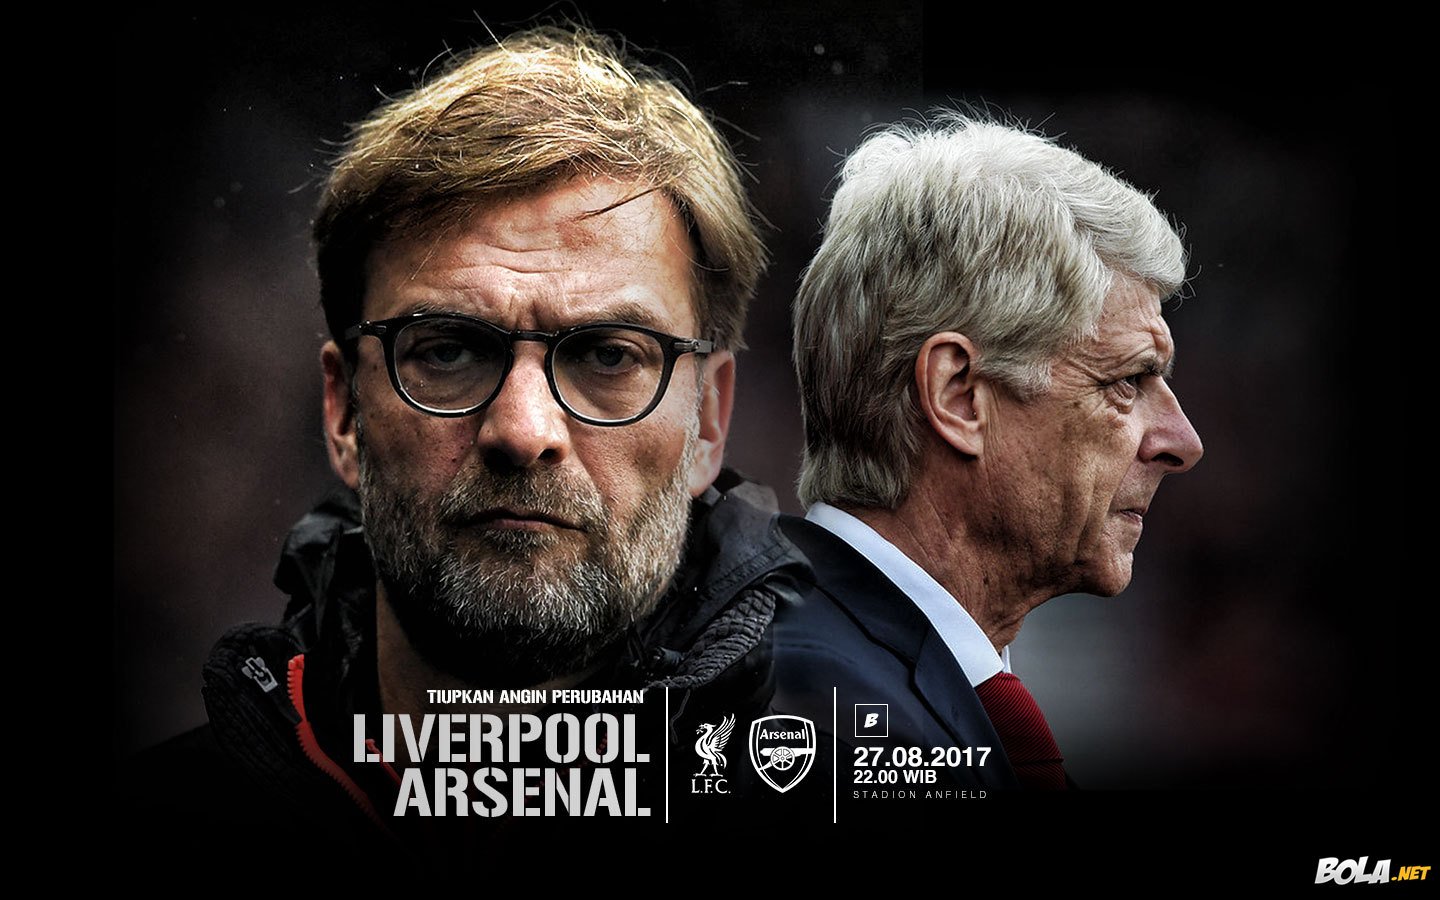 Deskripsi : Wallpaper Liverpool Vs Arsenal, size: 1440x900